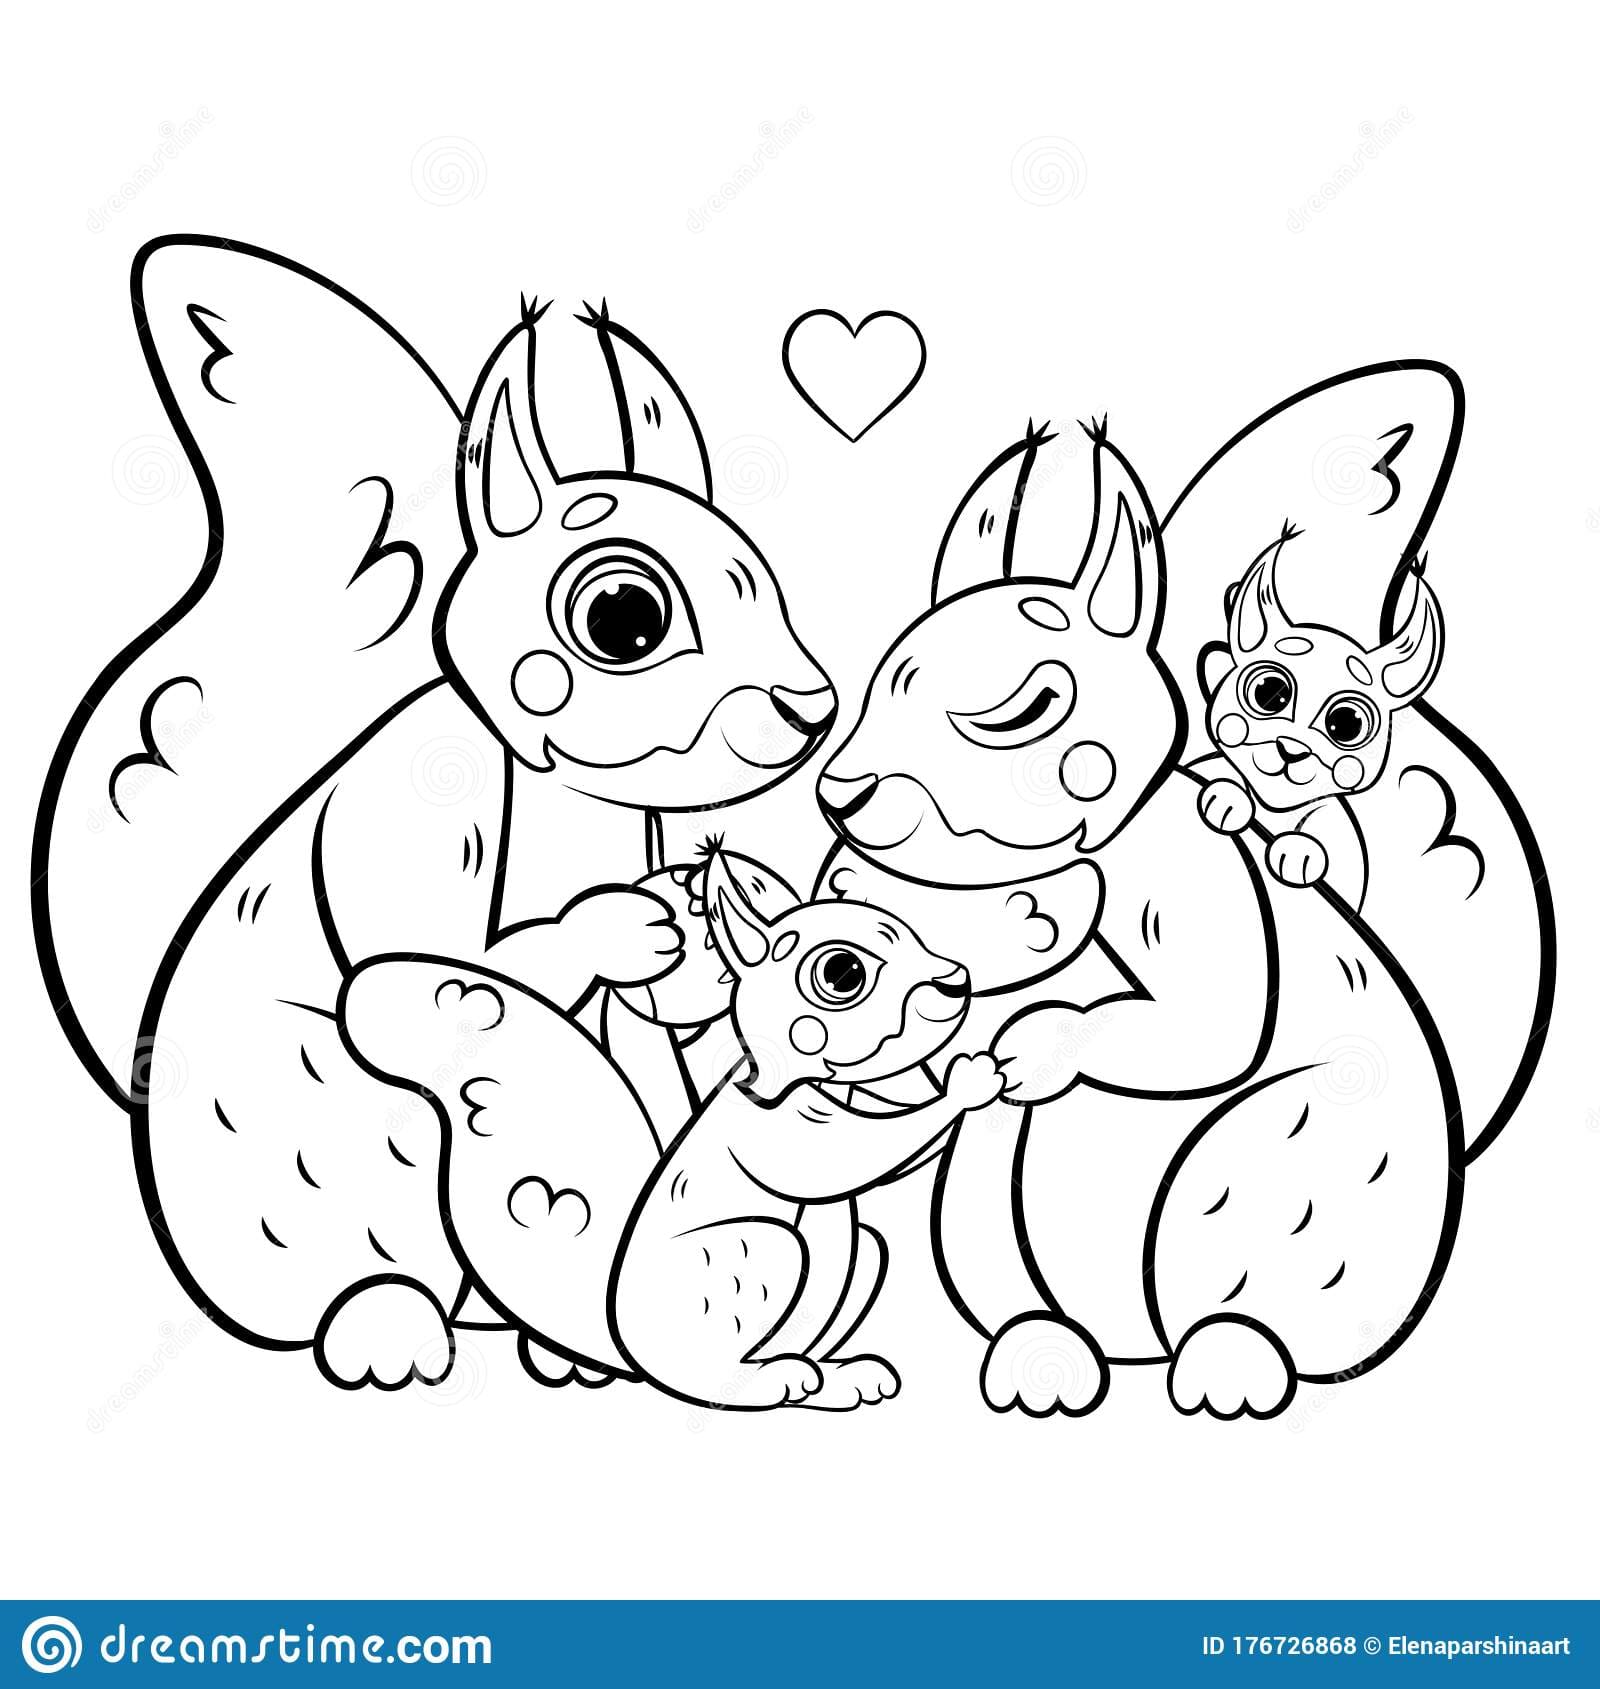 Cute Cartoon Squirrel Family Coloring Page